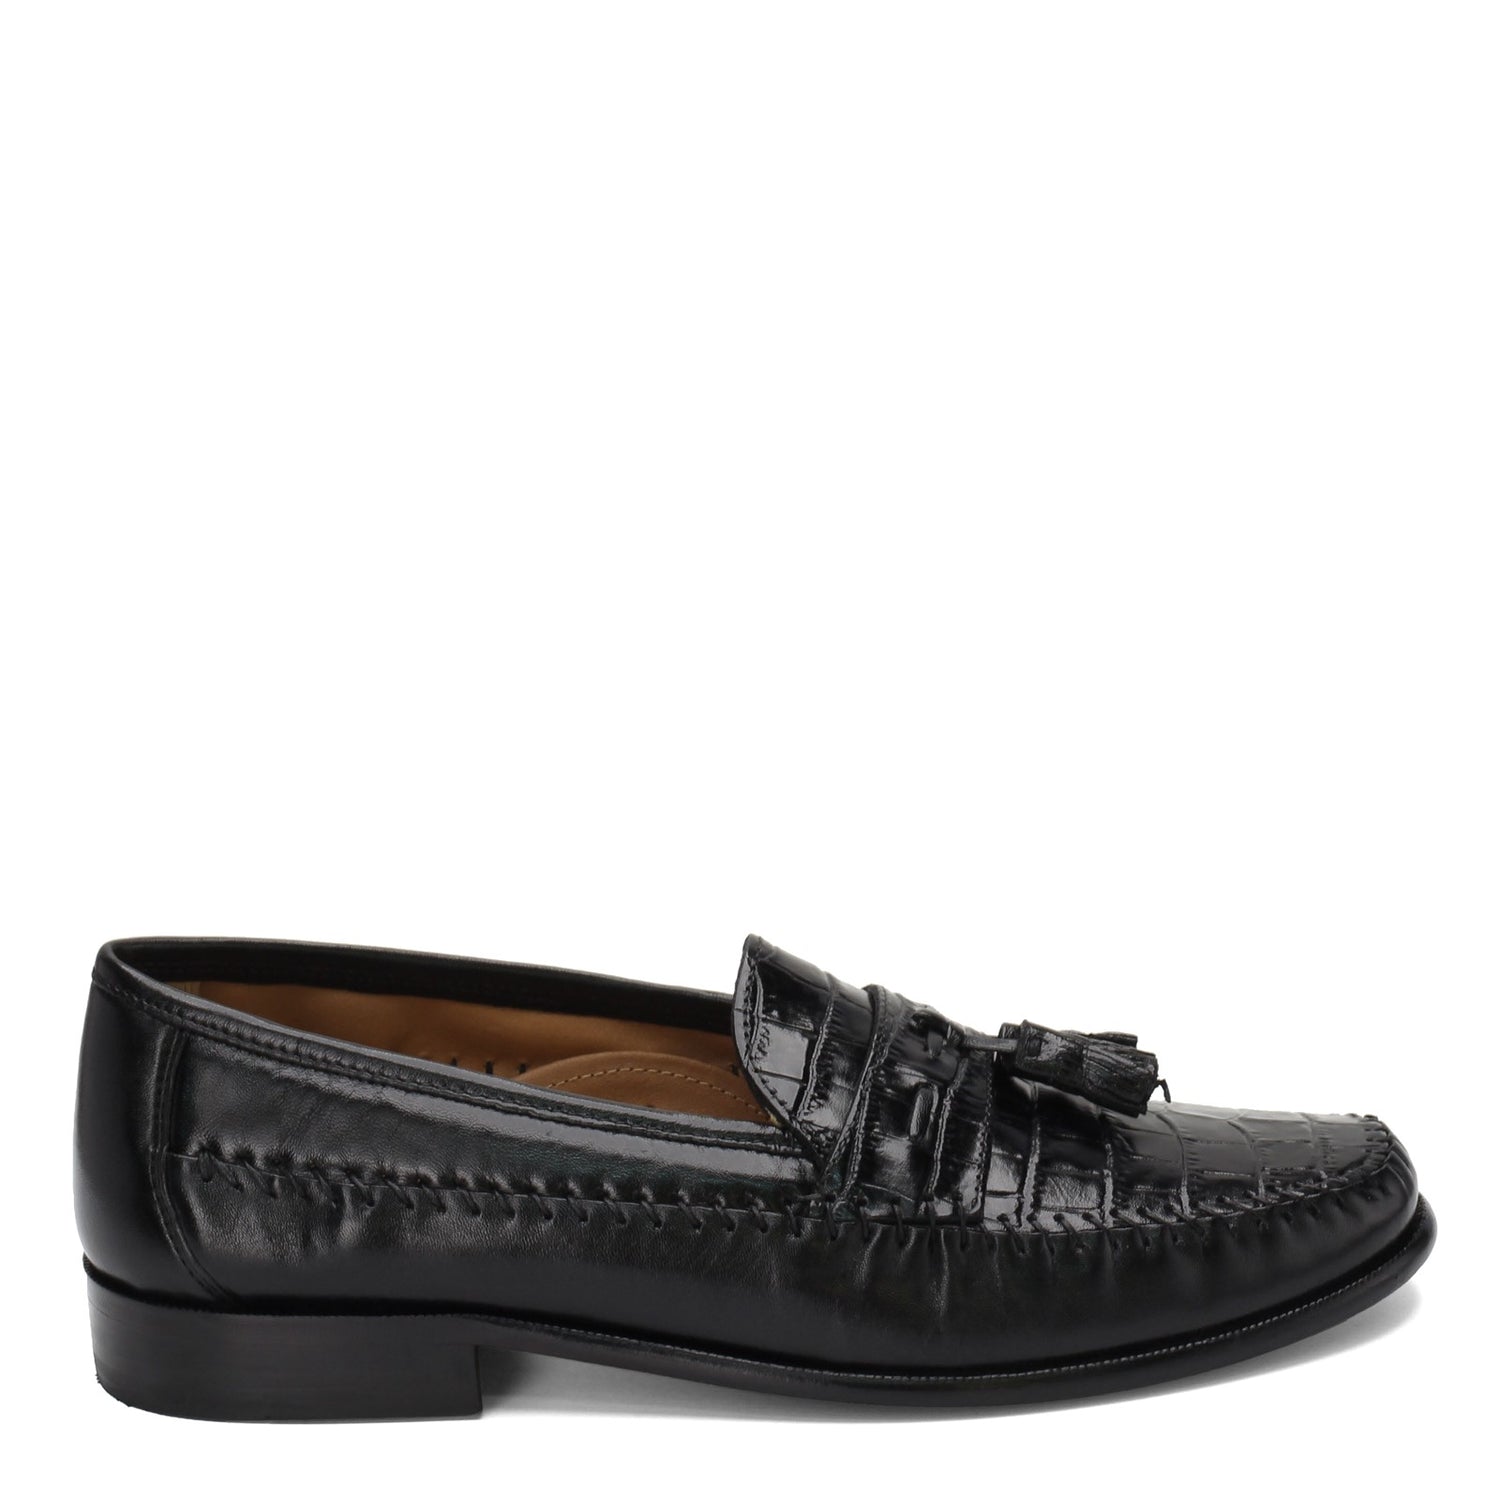 Pisa Moccasin Shoe - Black